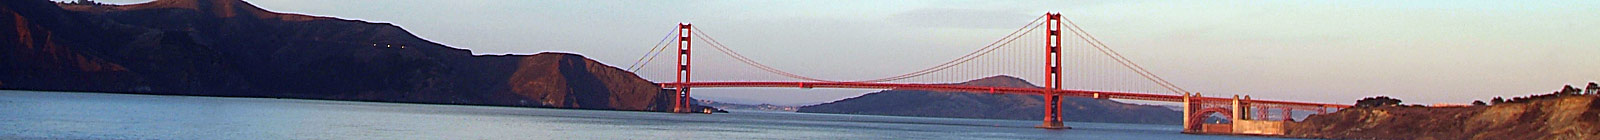 Golden Gate Bridge - Banner